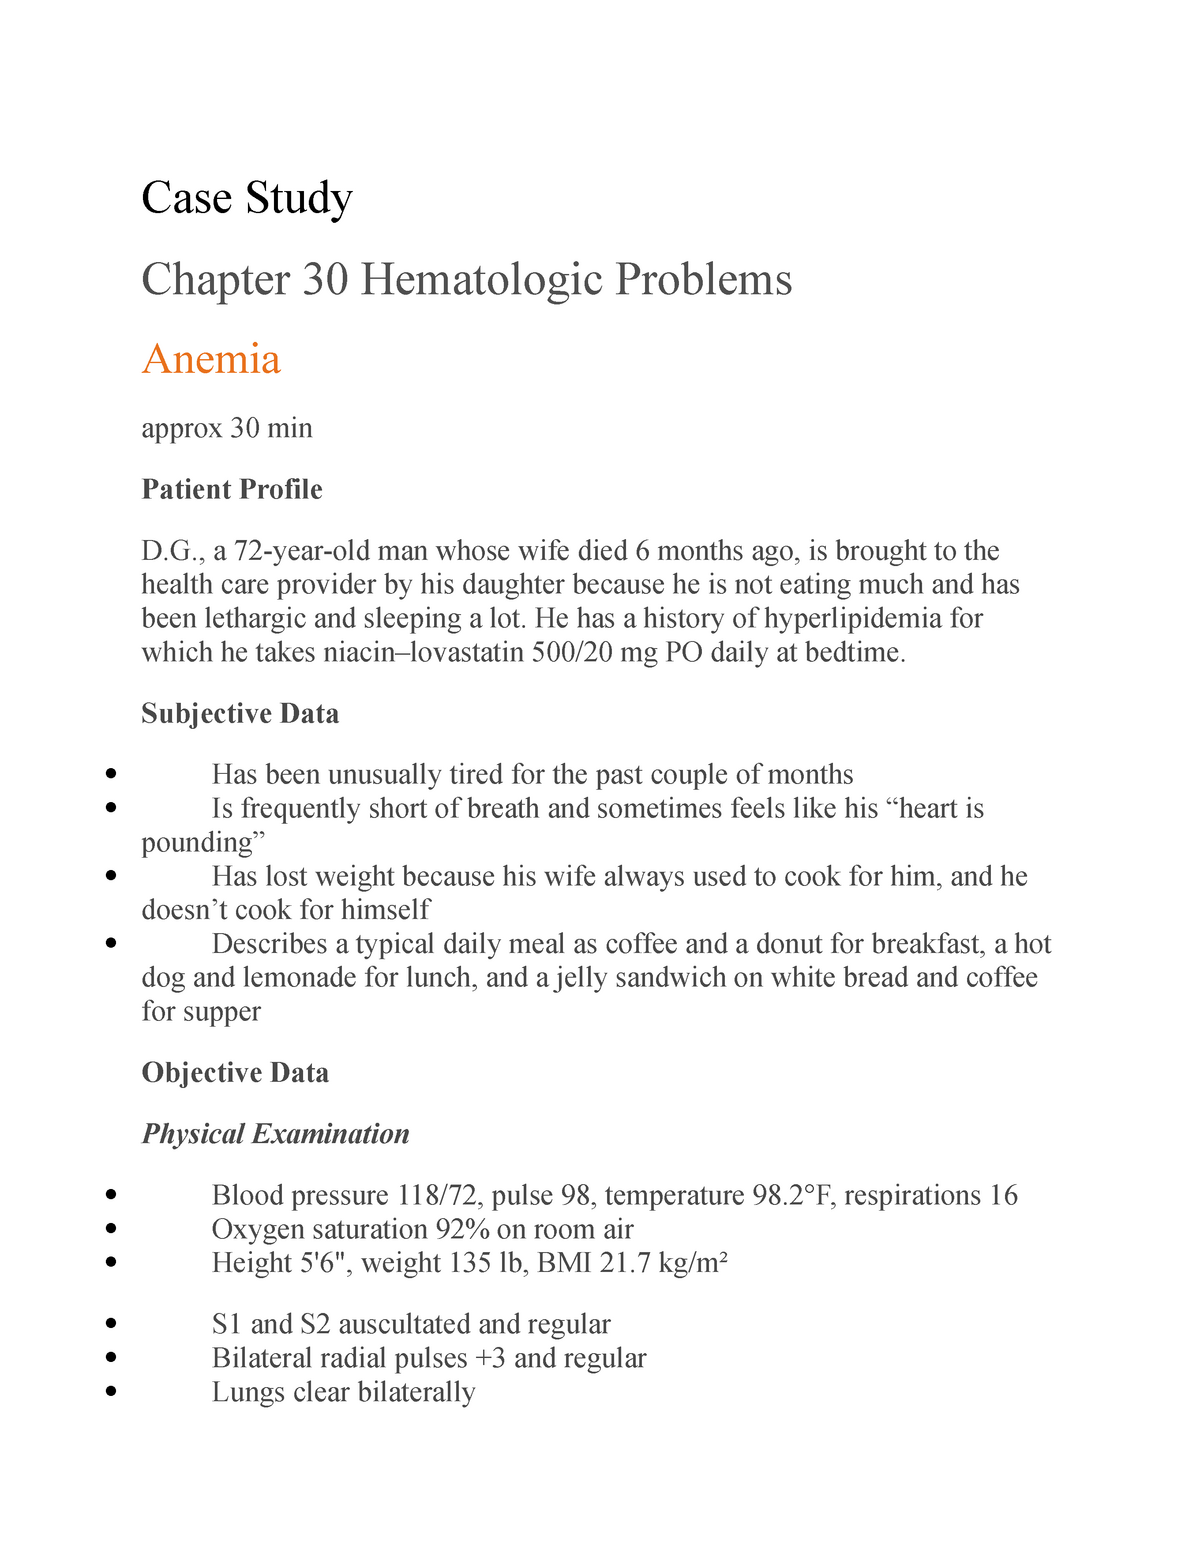 anemia case study